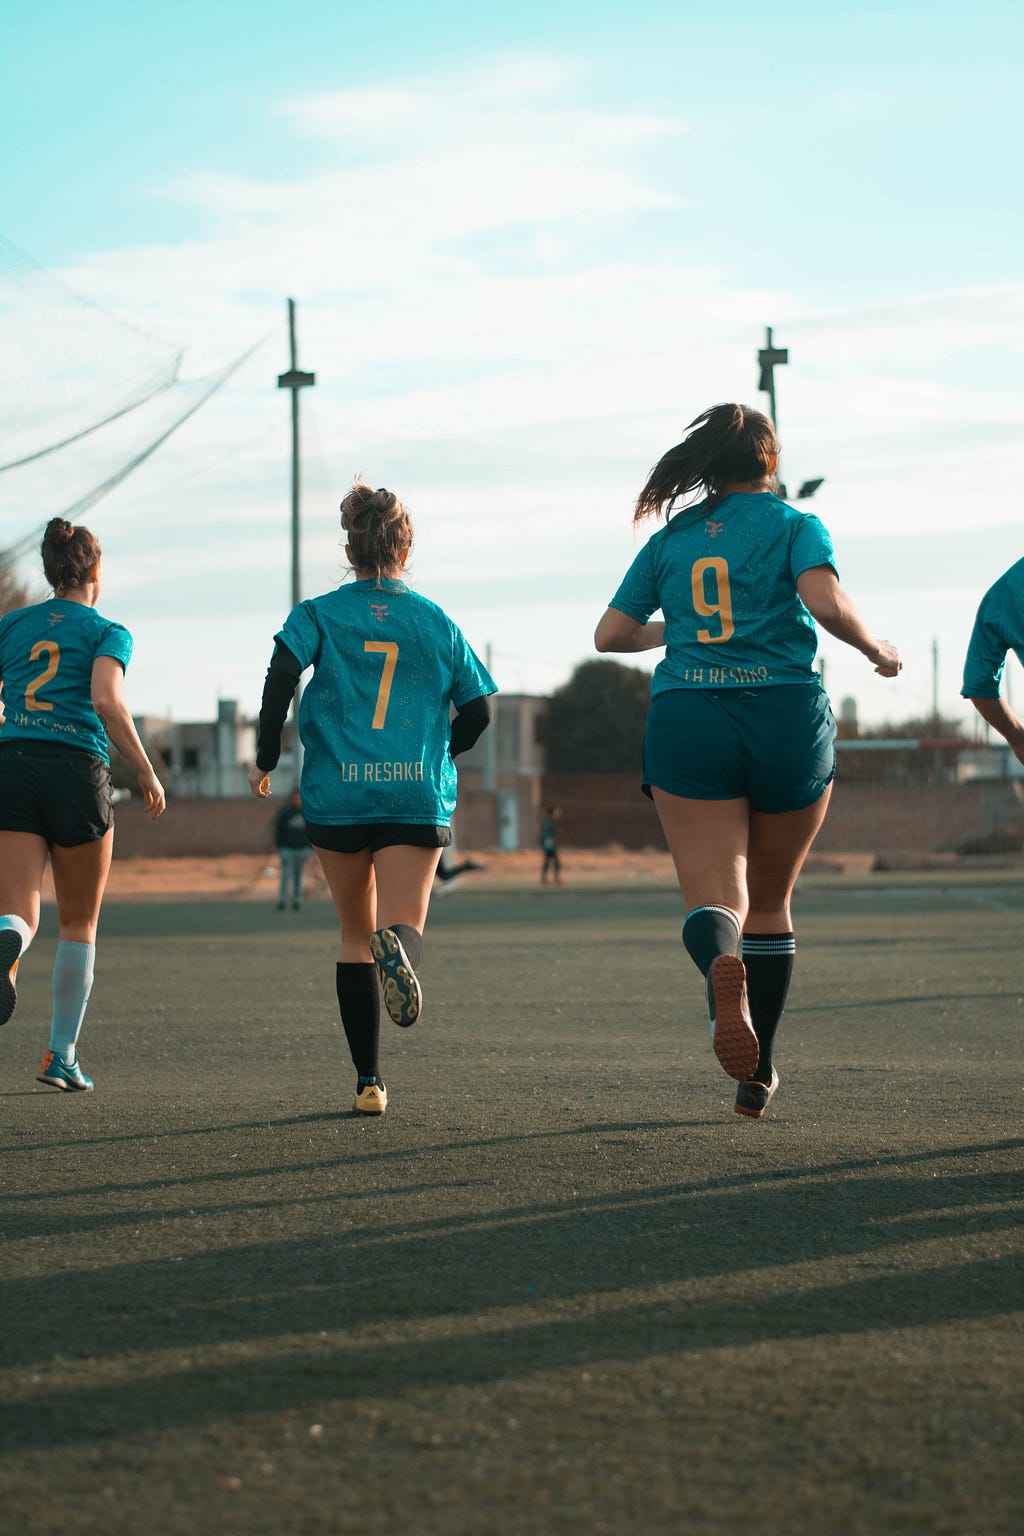 A group of three women wearing teal sports jerseys running on a green field